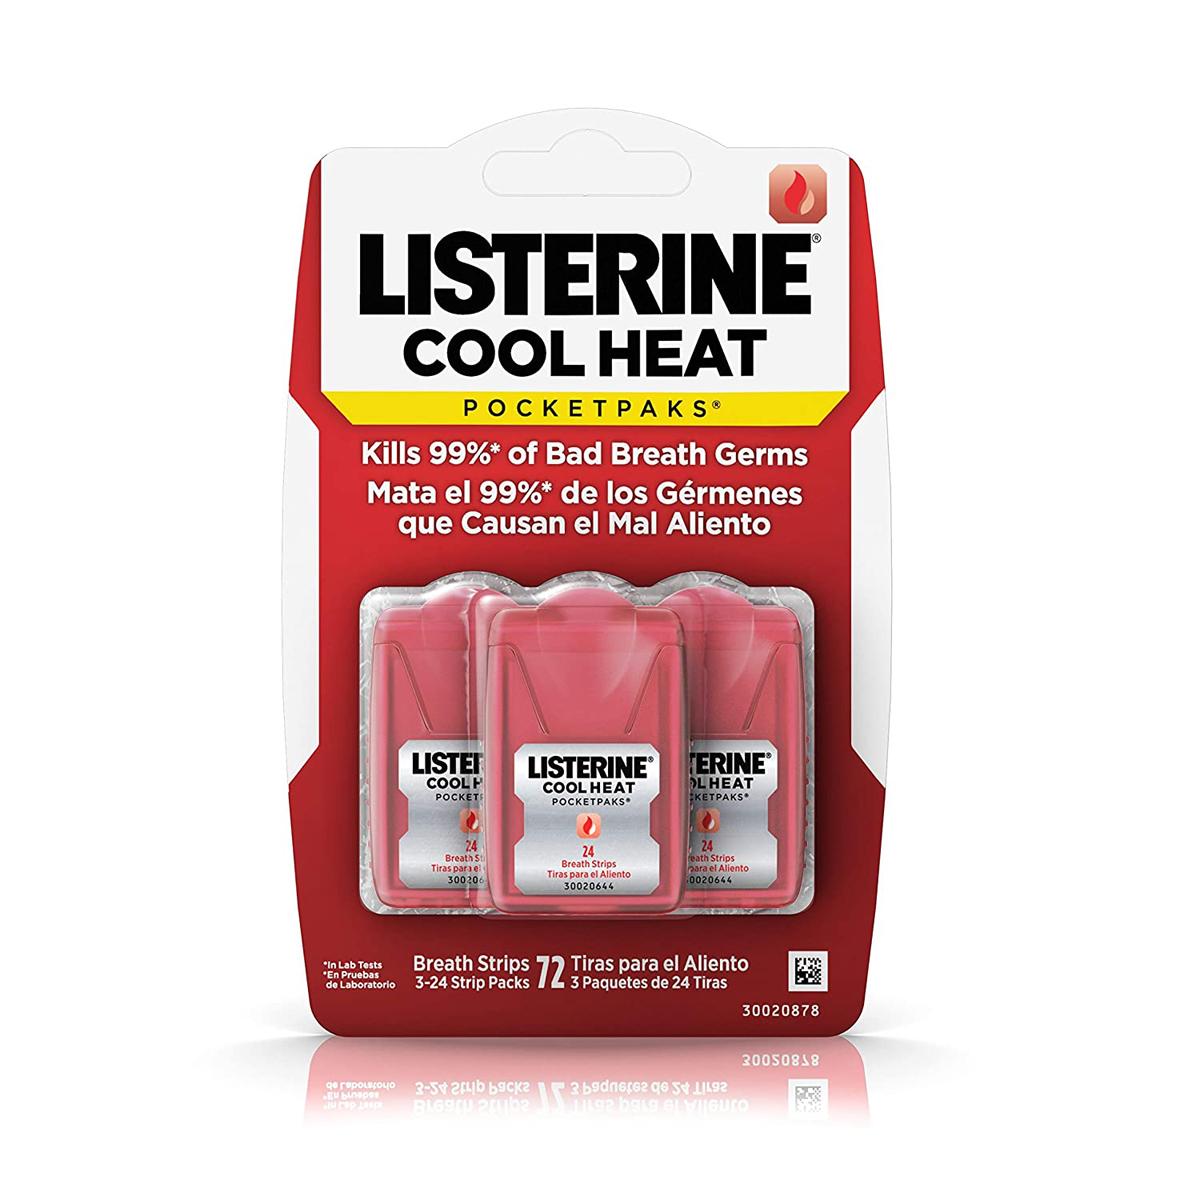 3 Listerine Cool Heat Pocketpaks Breath Strips for $2.70 Shipped